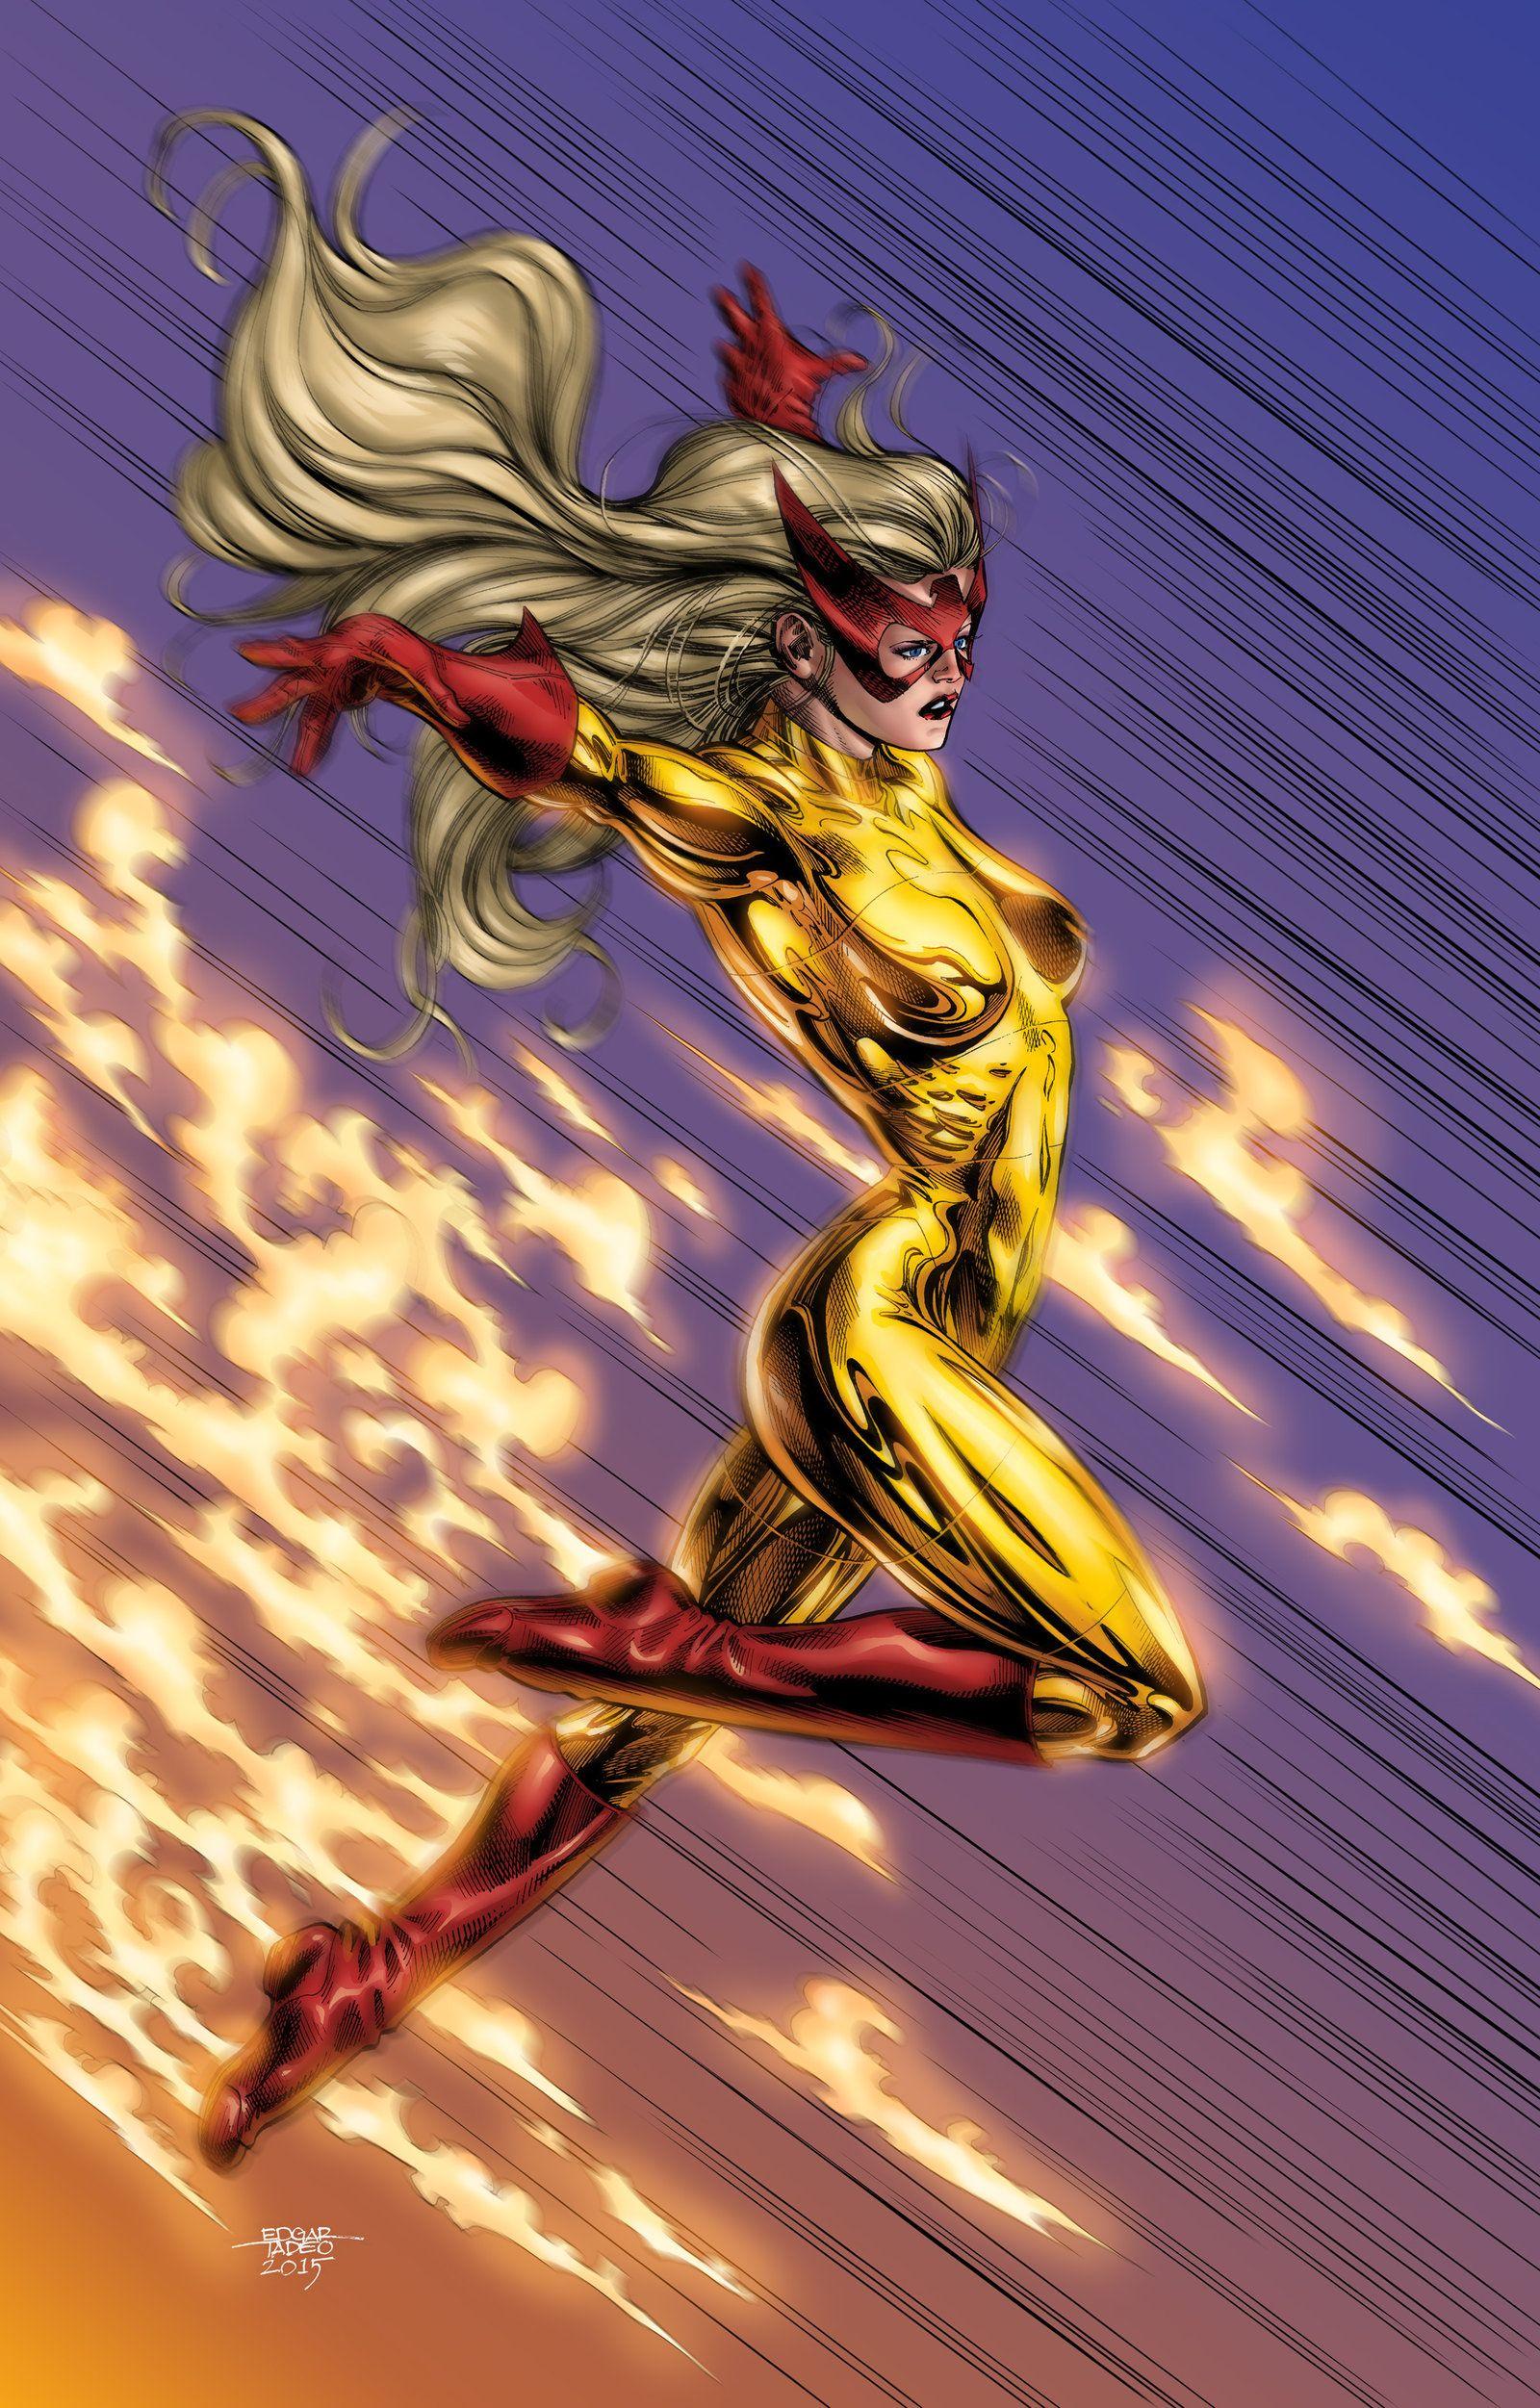 Best Firestar image. Marvel characters, Marvel heroes, Firestar